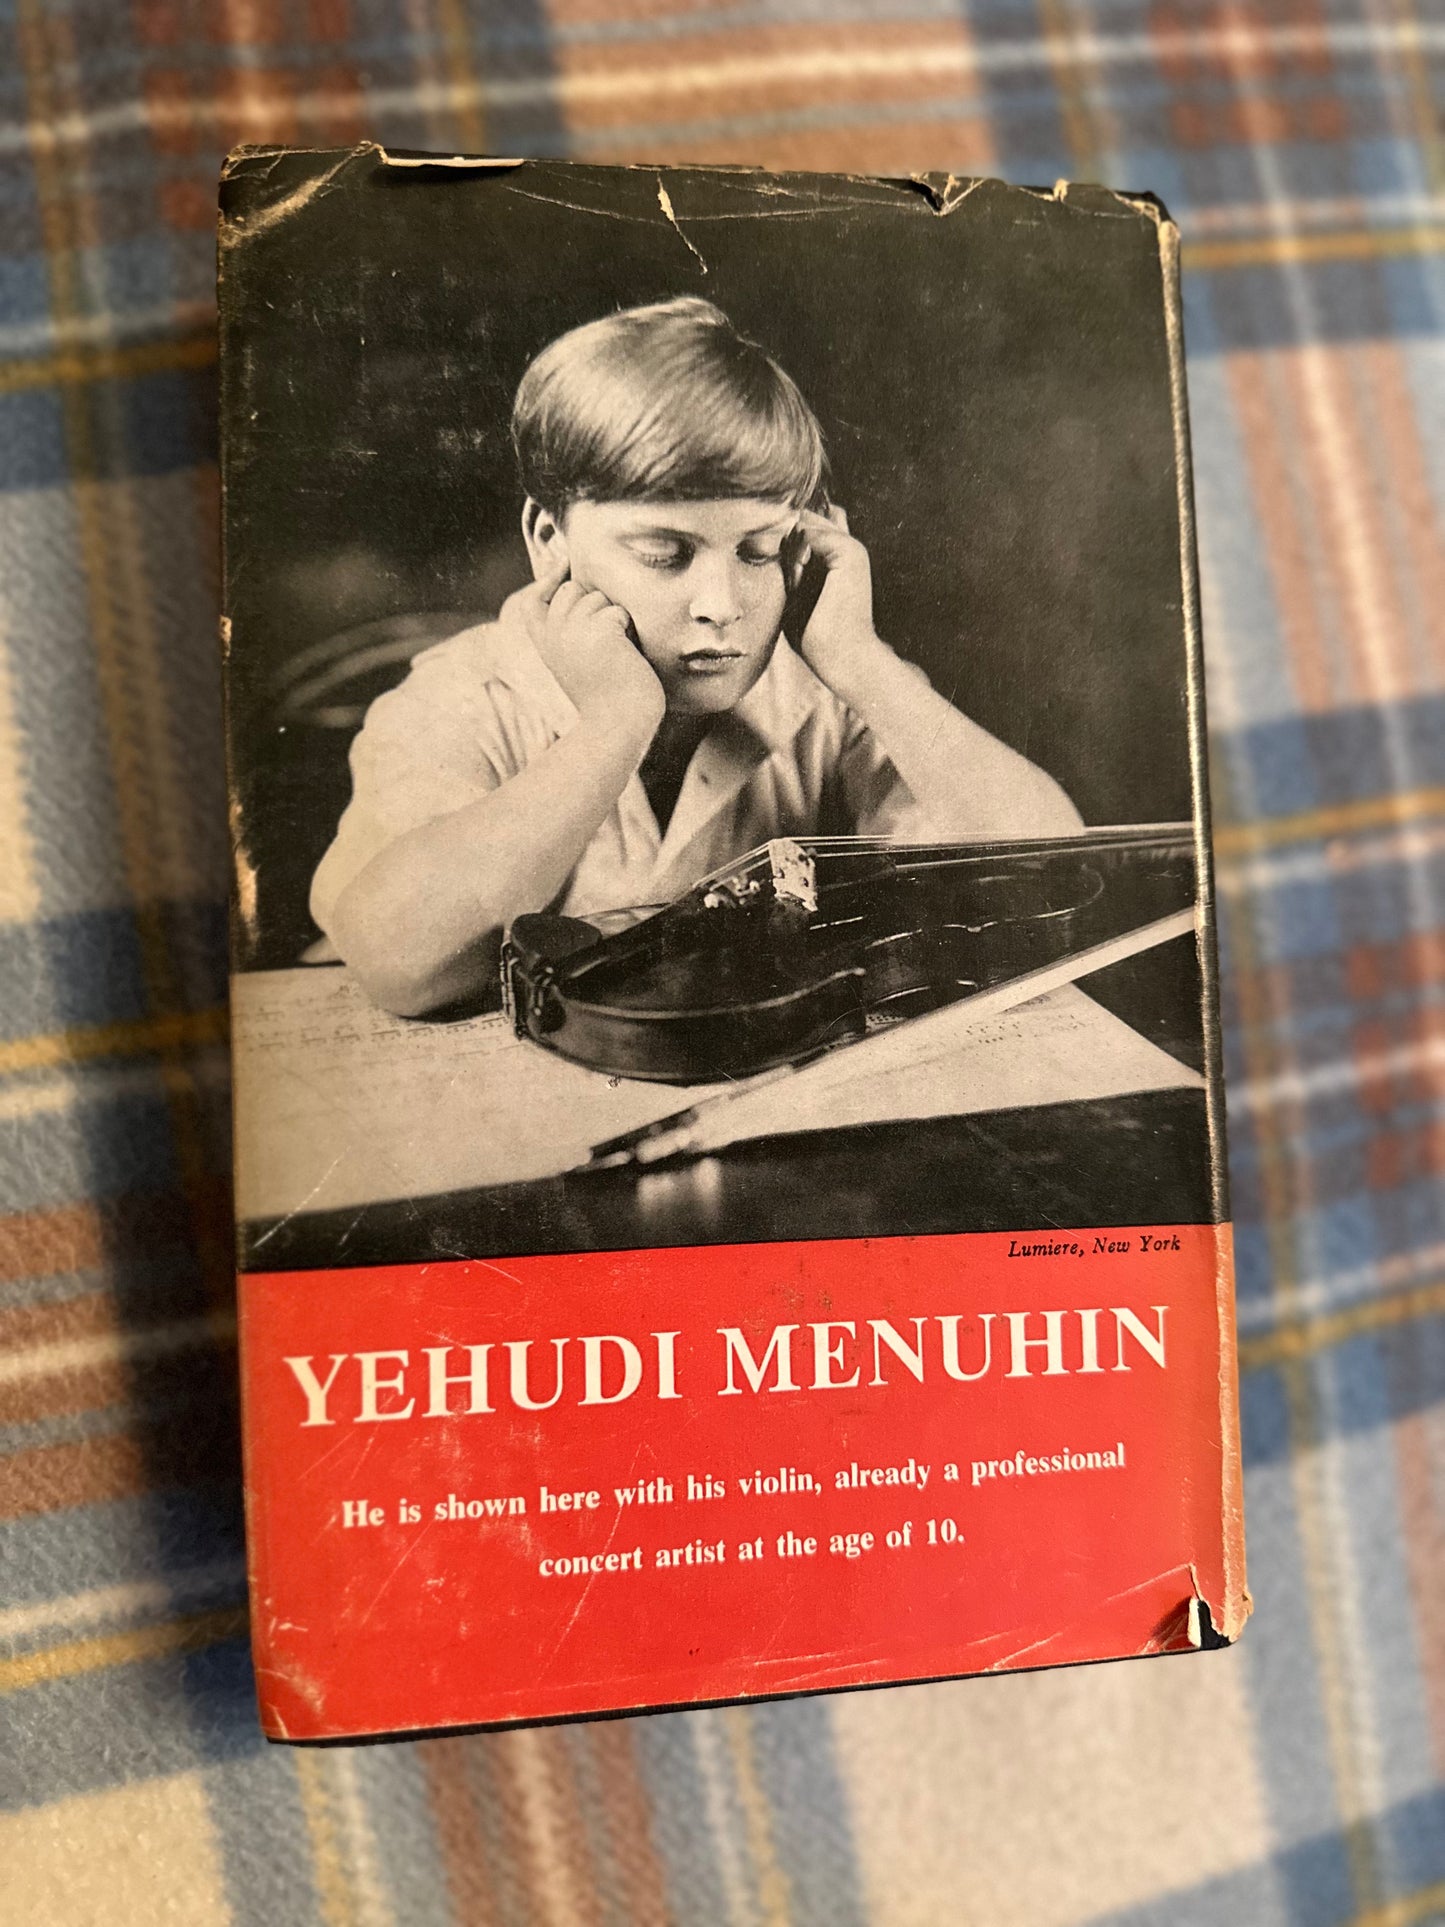 1956*1st* Yehudi Menuhin: The Story Of The Man & The Musician - Robert Magidoff(Robert Hale Publisher)